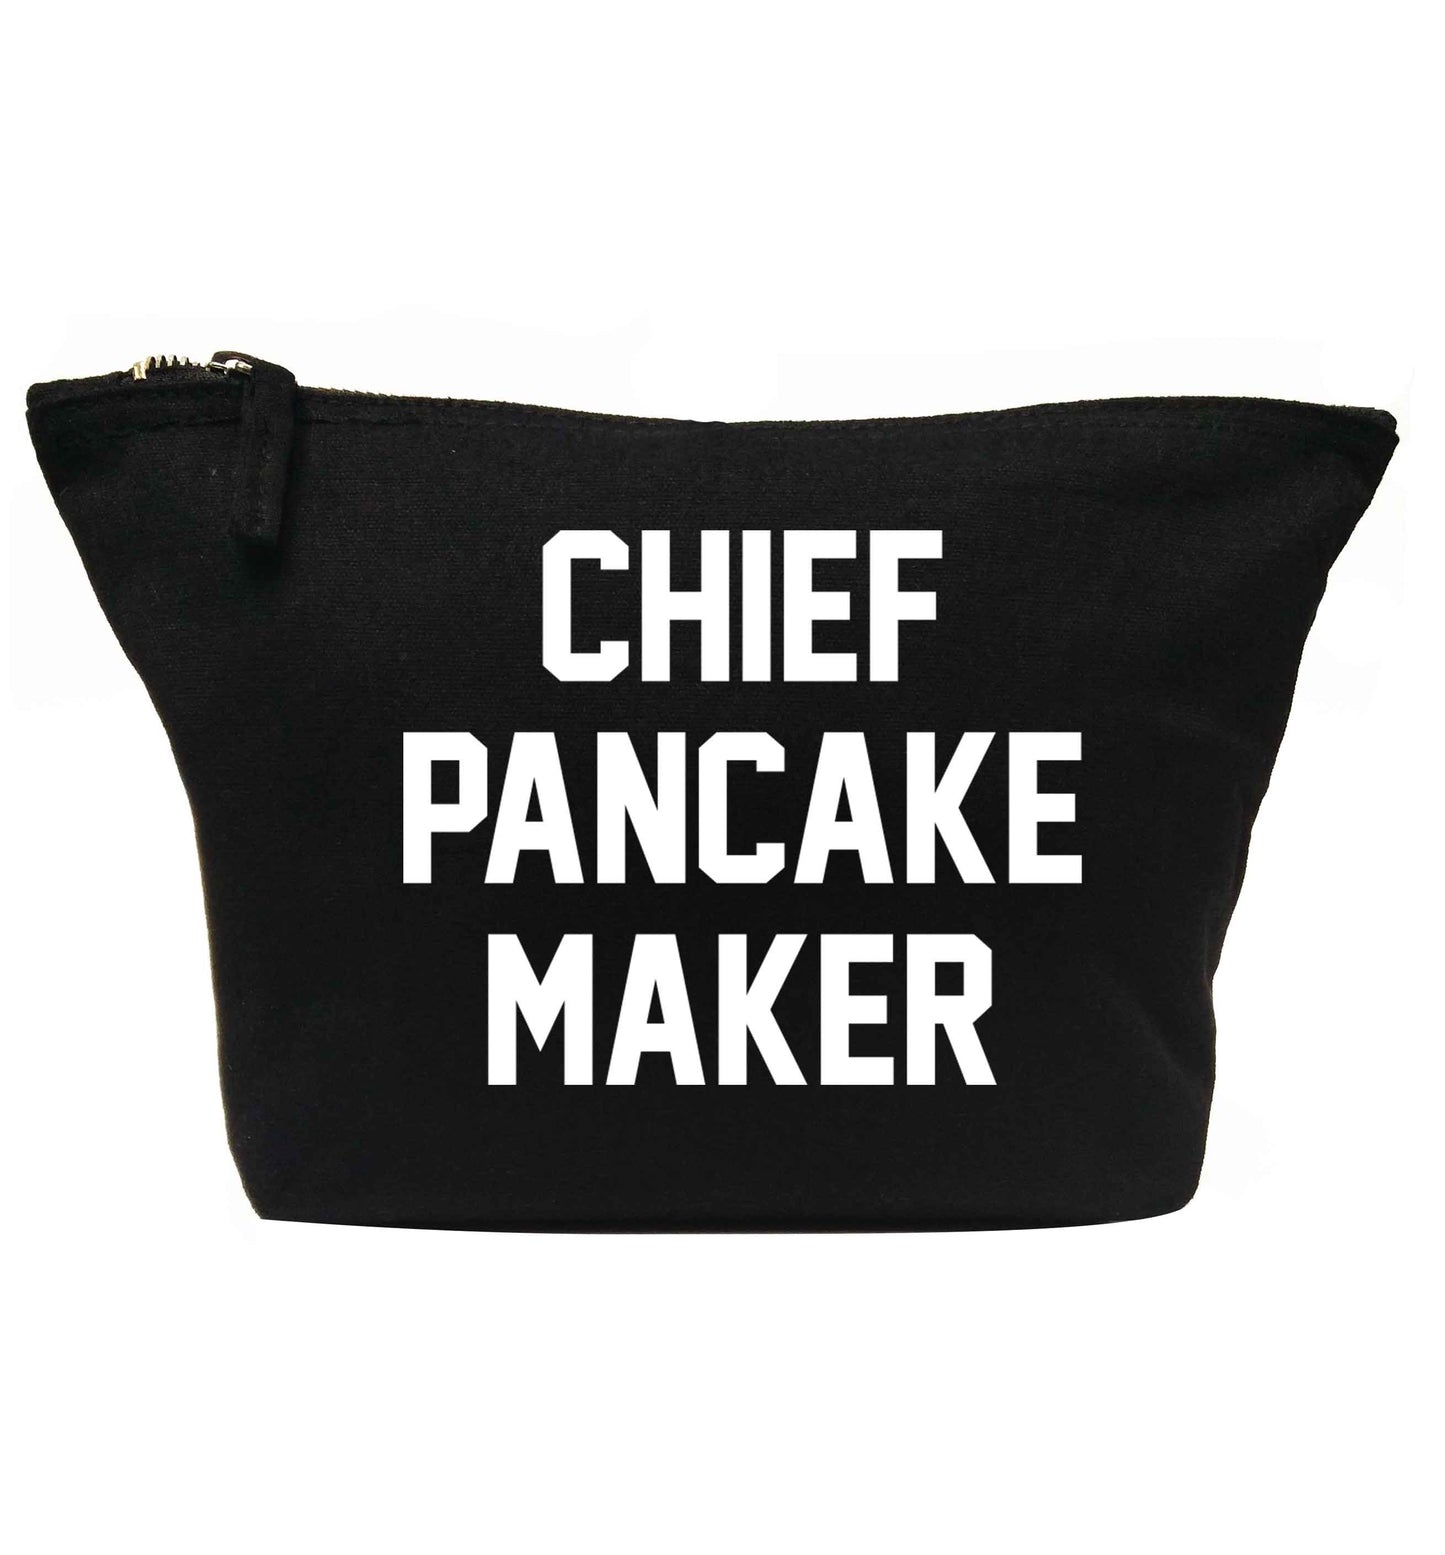 Chief pancake maker | Makeup / wash bag